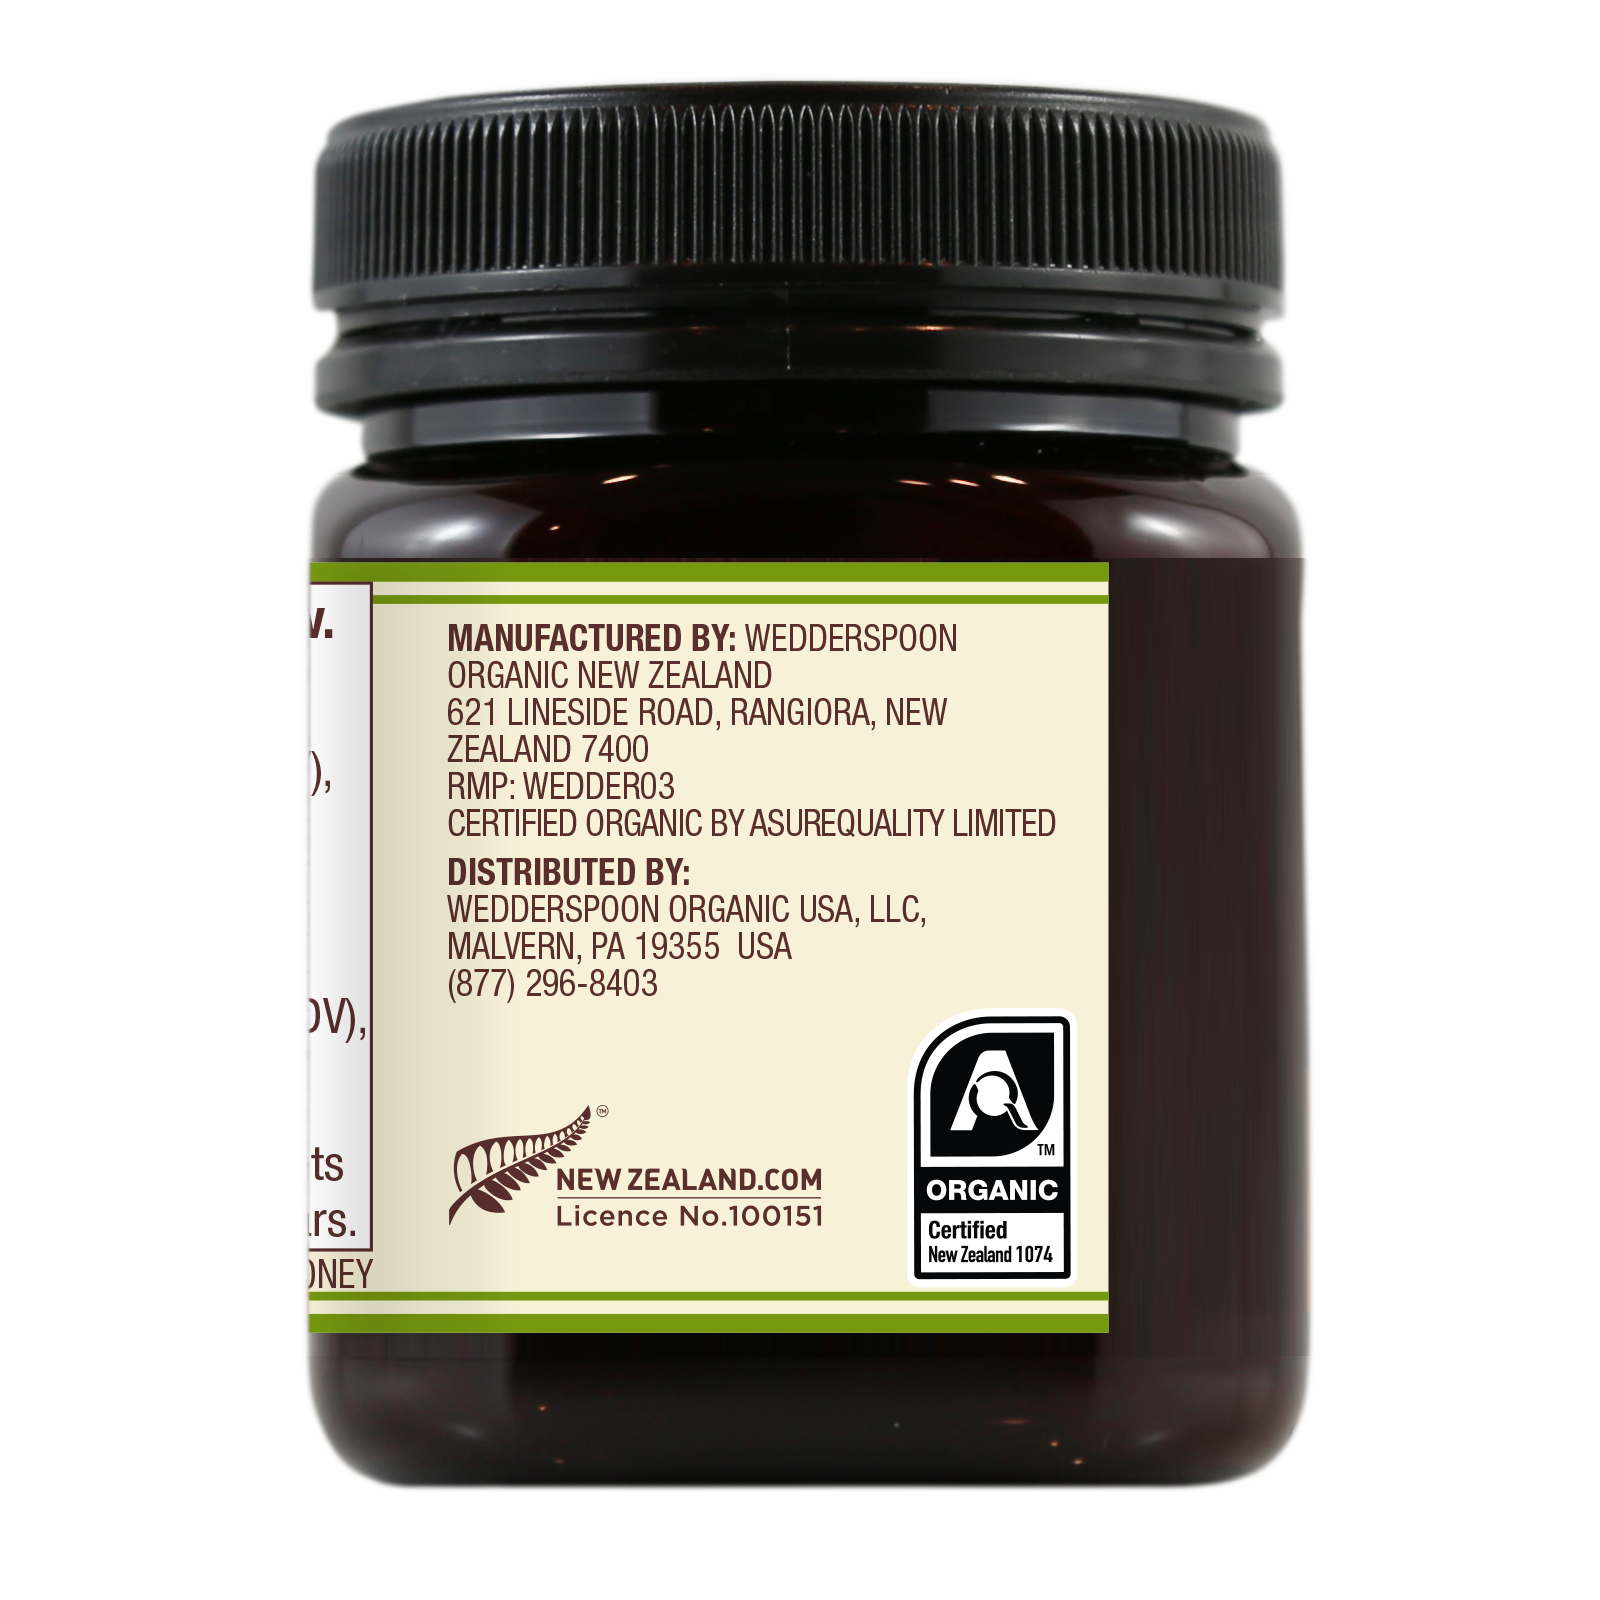 Organic Raw Monofloral Manuka Honey, 250g/8.8oz